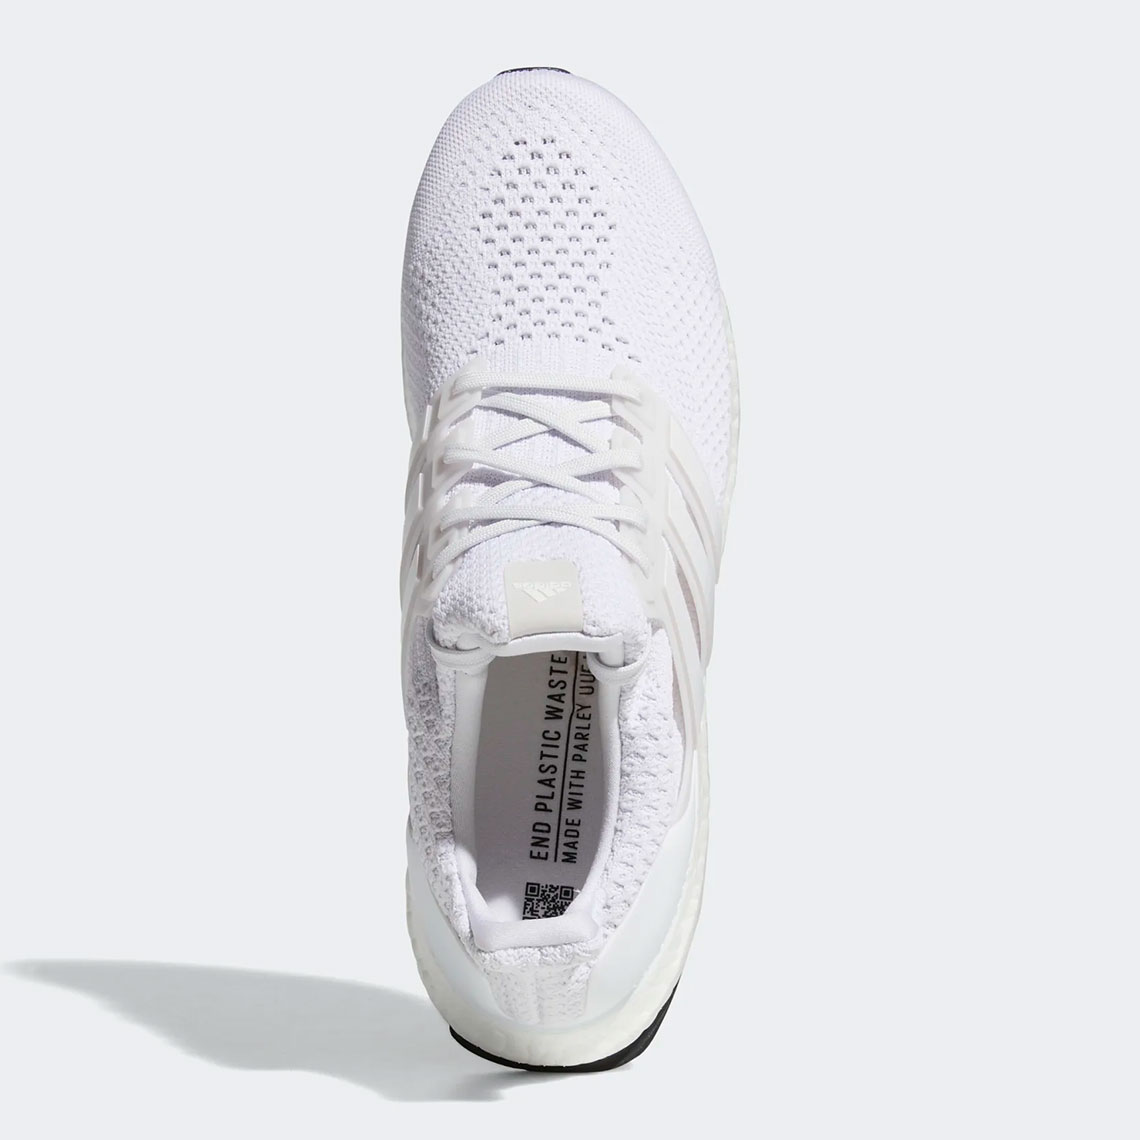 adidas ultra boost white black gv8740 release date 2